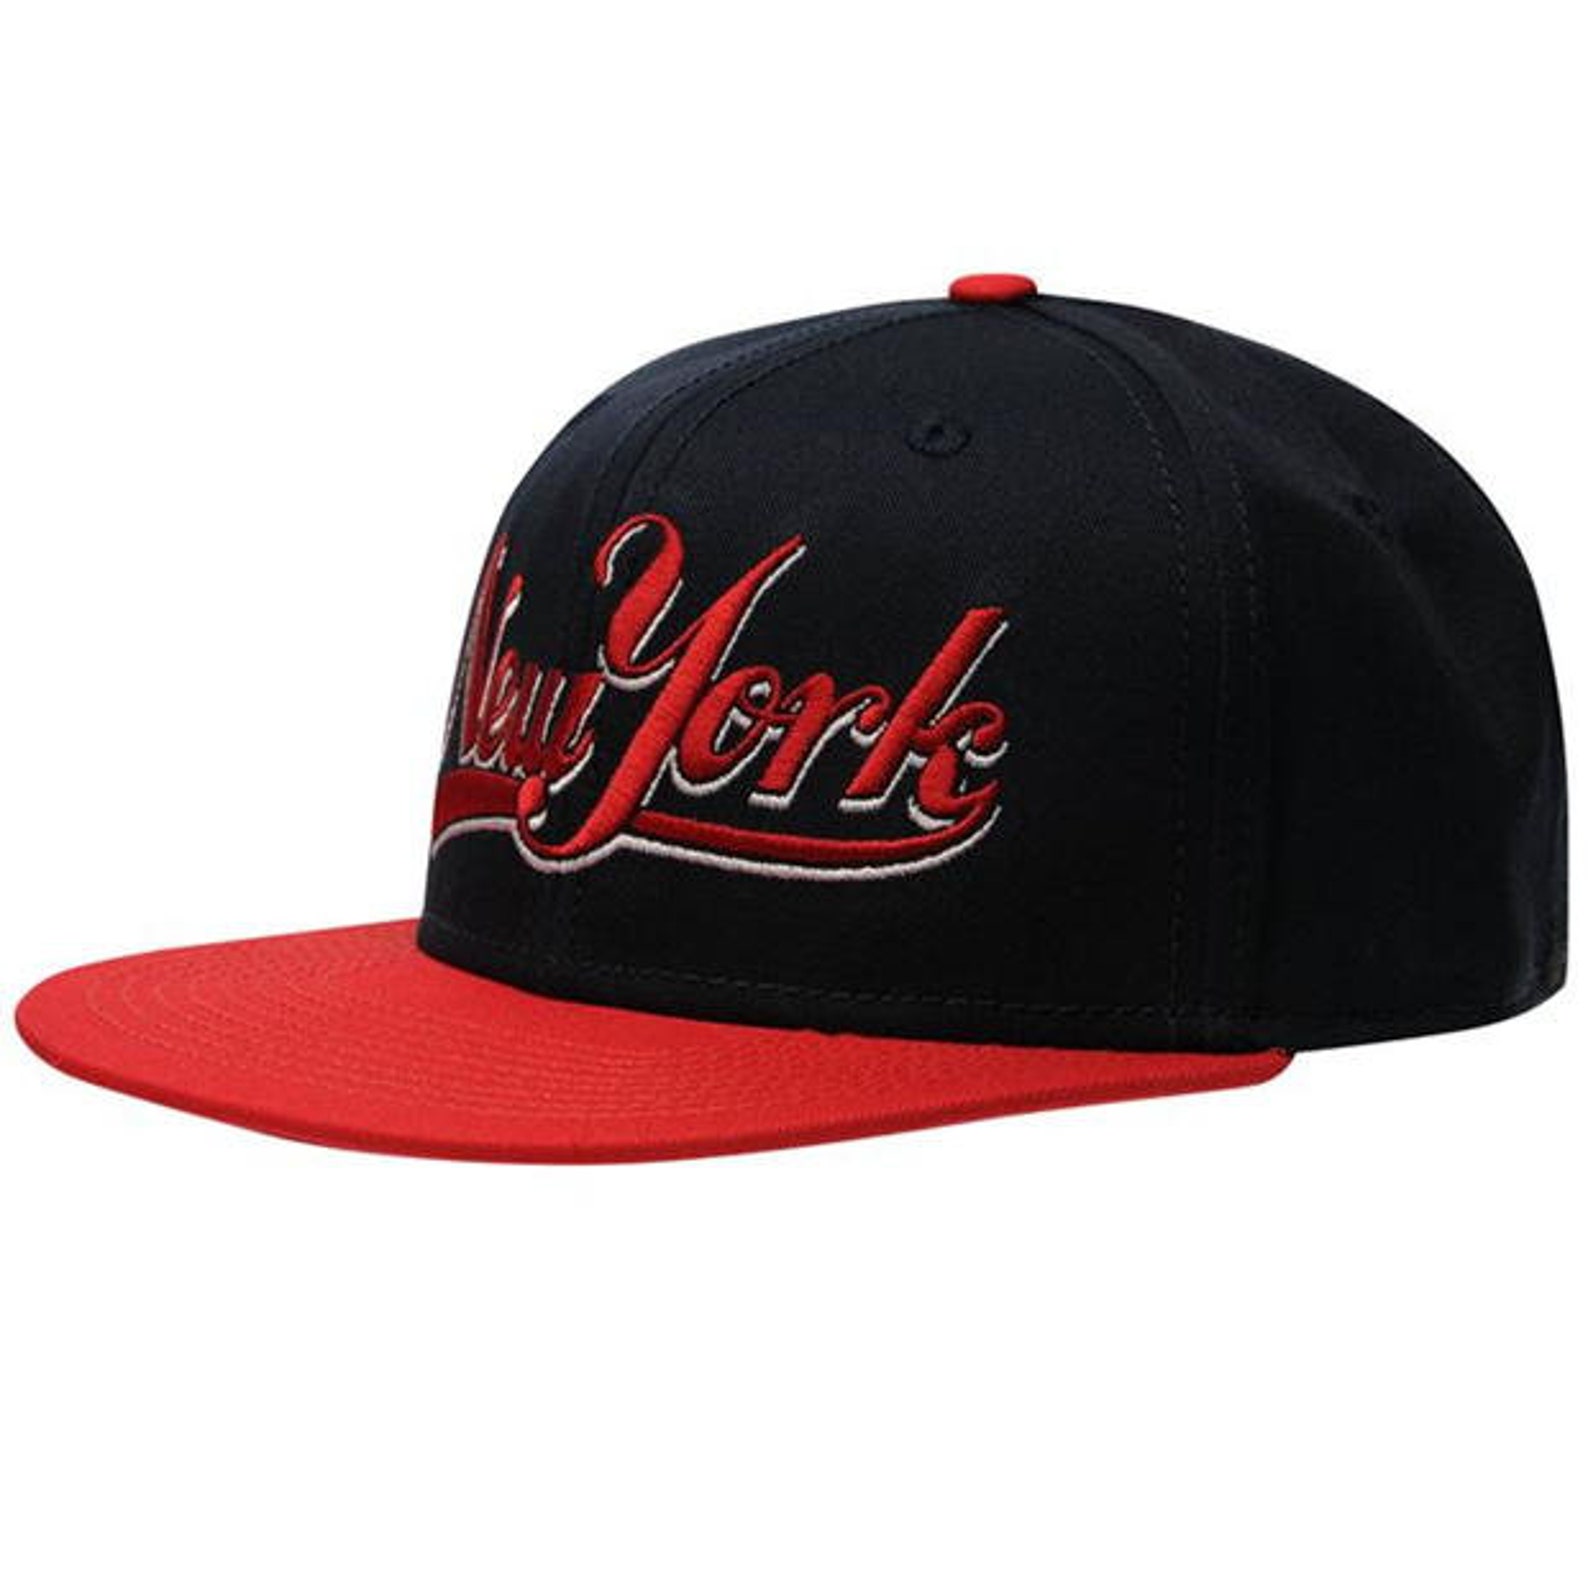 Baseball cap No fear mens/ Boys snapback baseball hat cap | Etsy